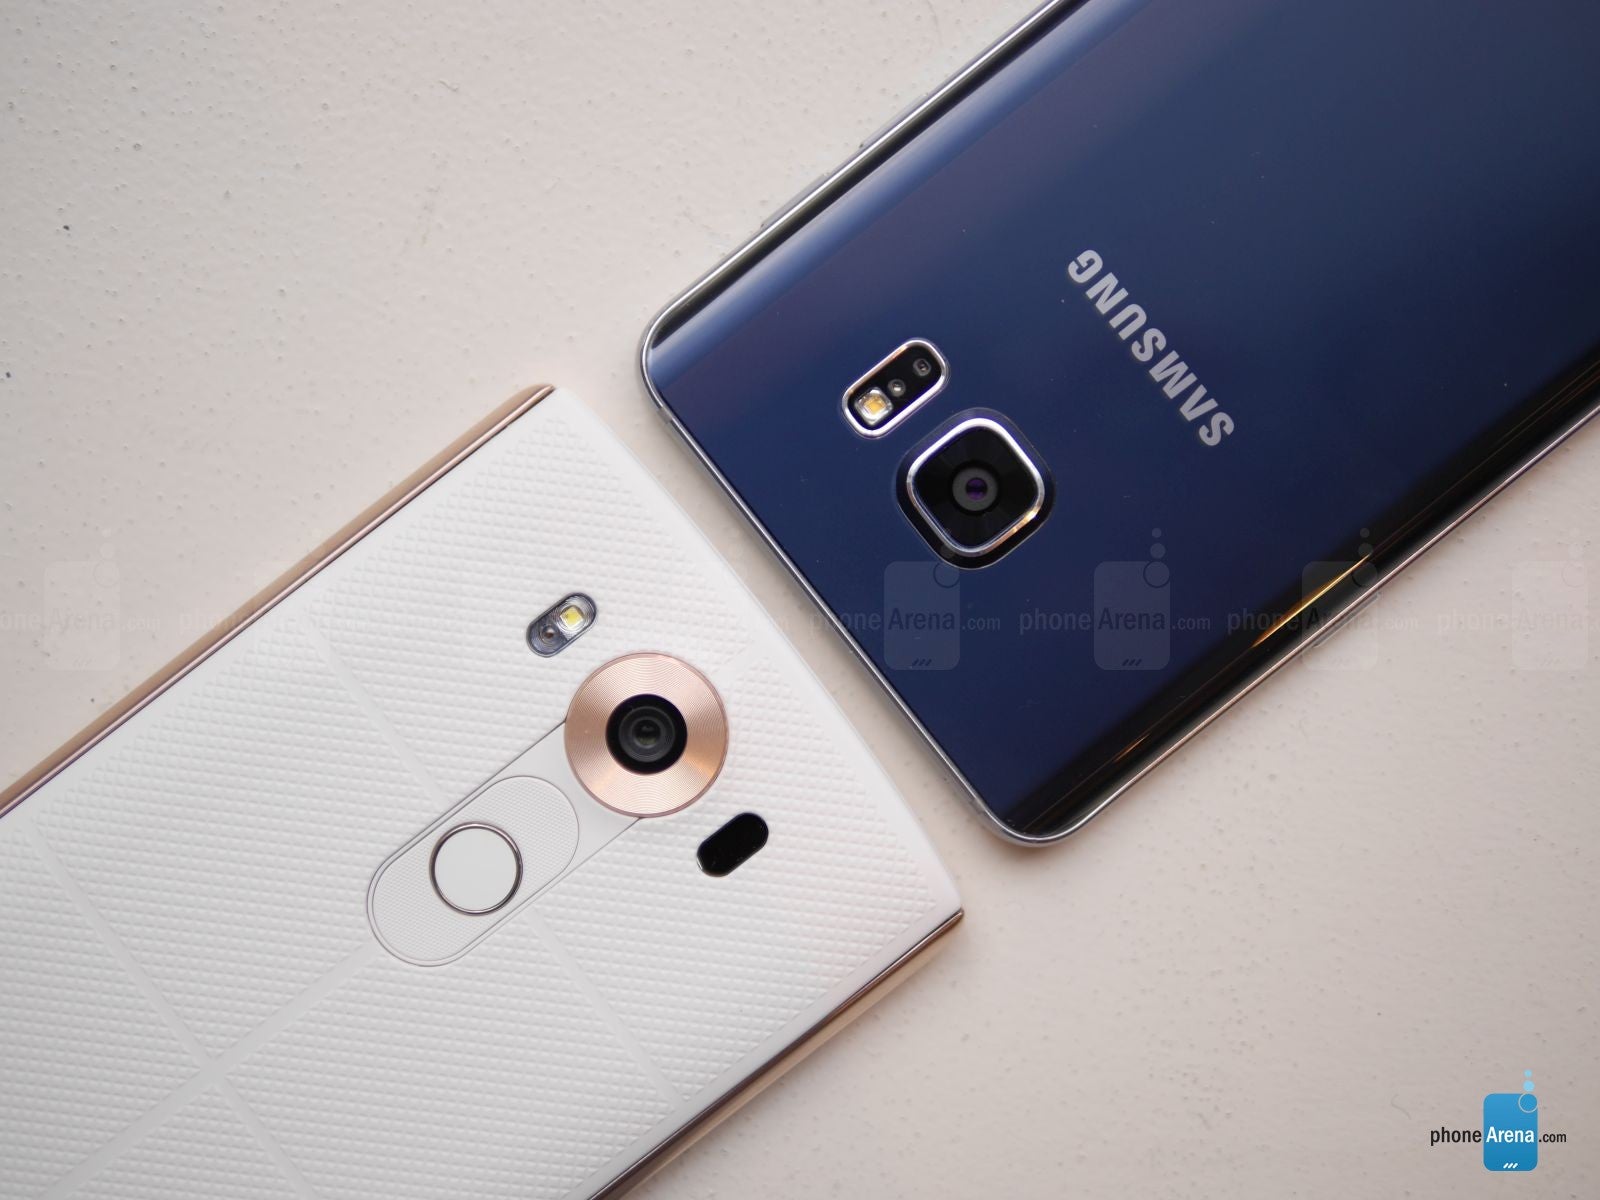 LG V10 vs Samsung Galaxy Note5: first look